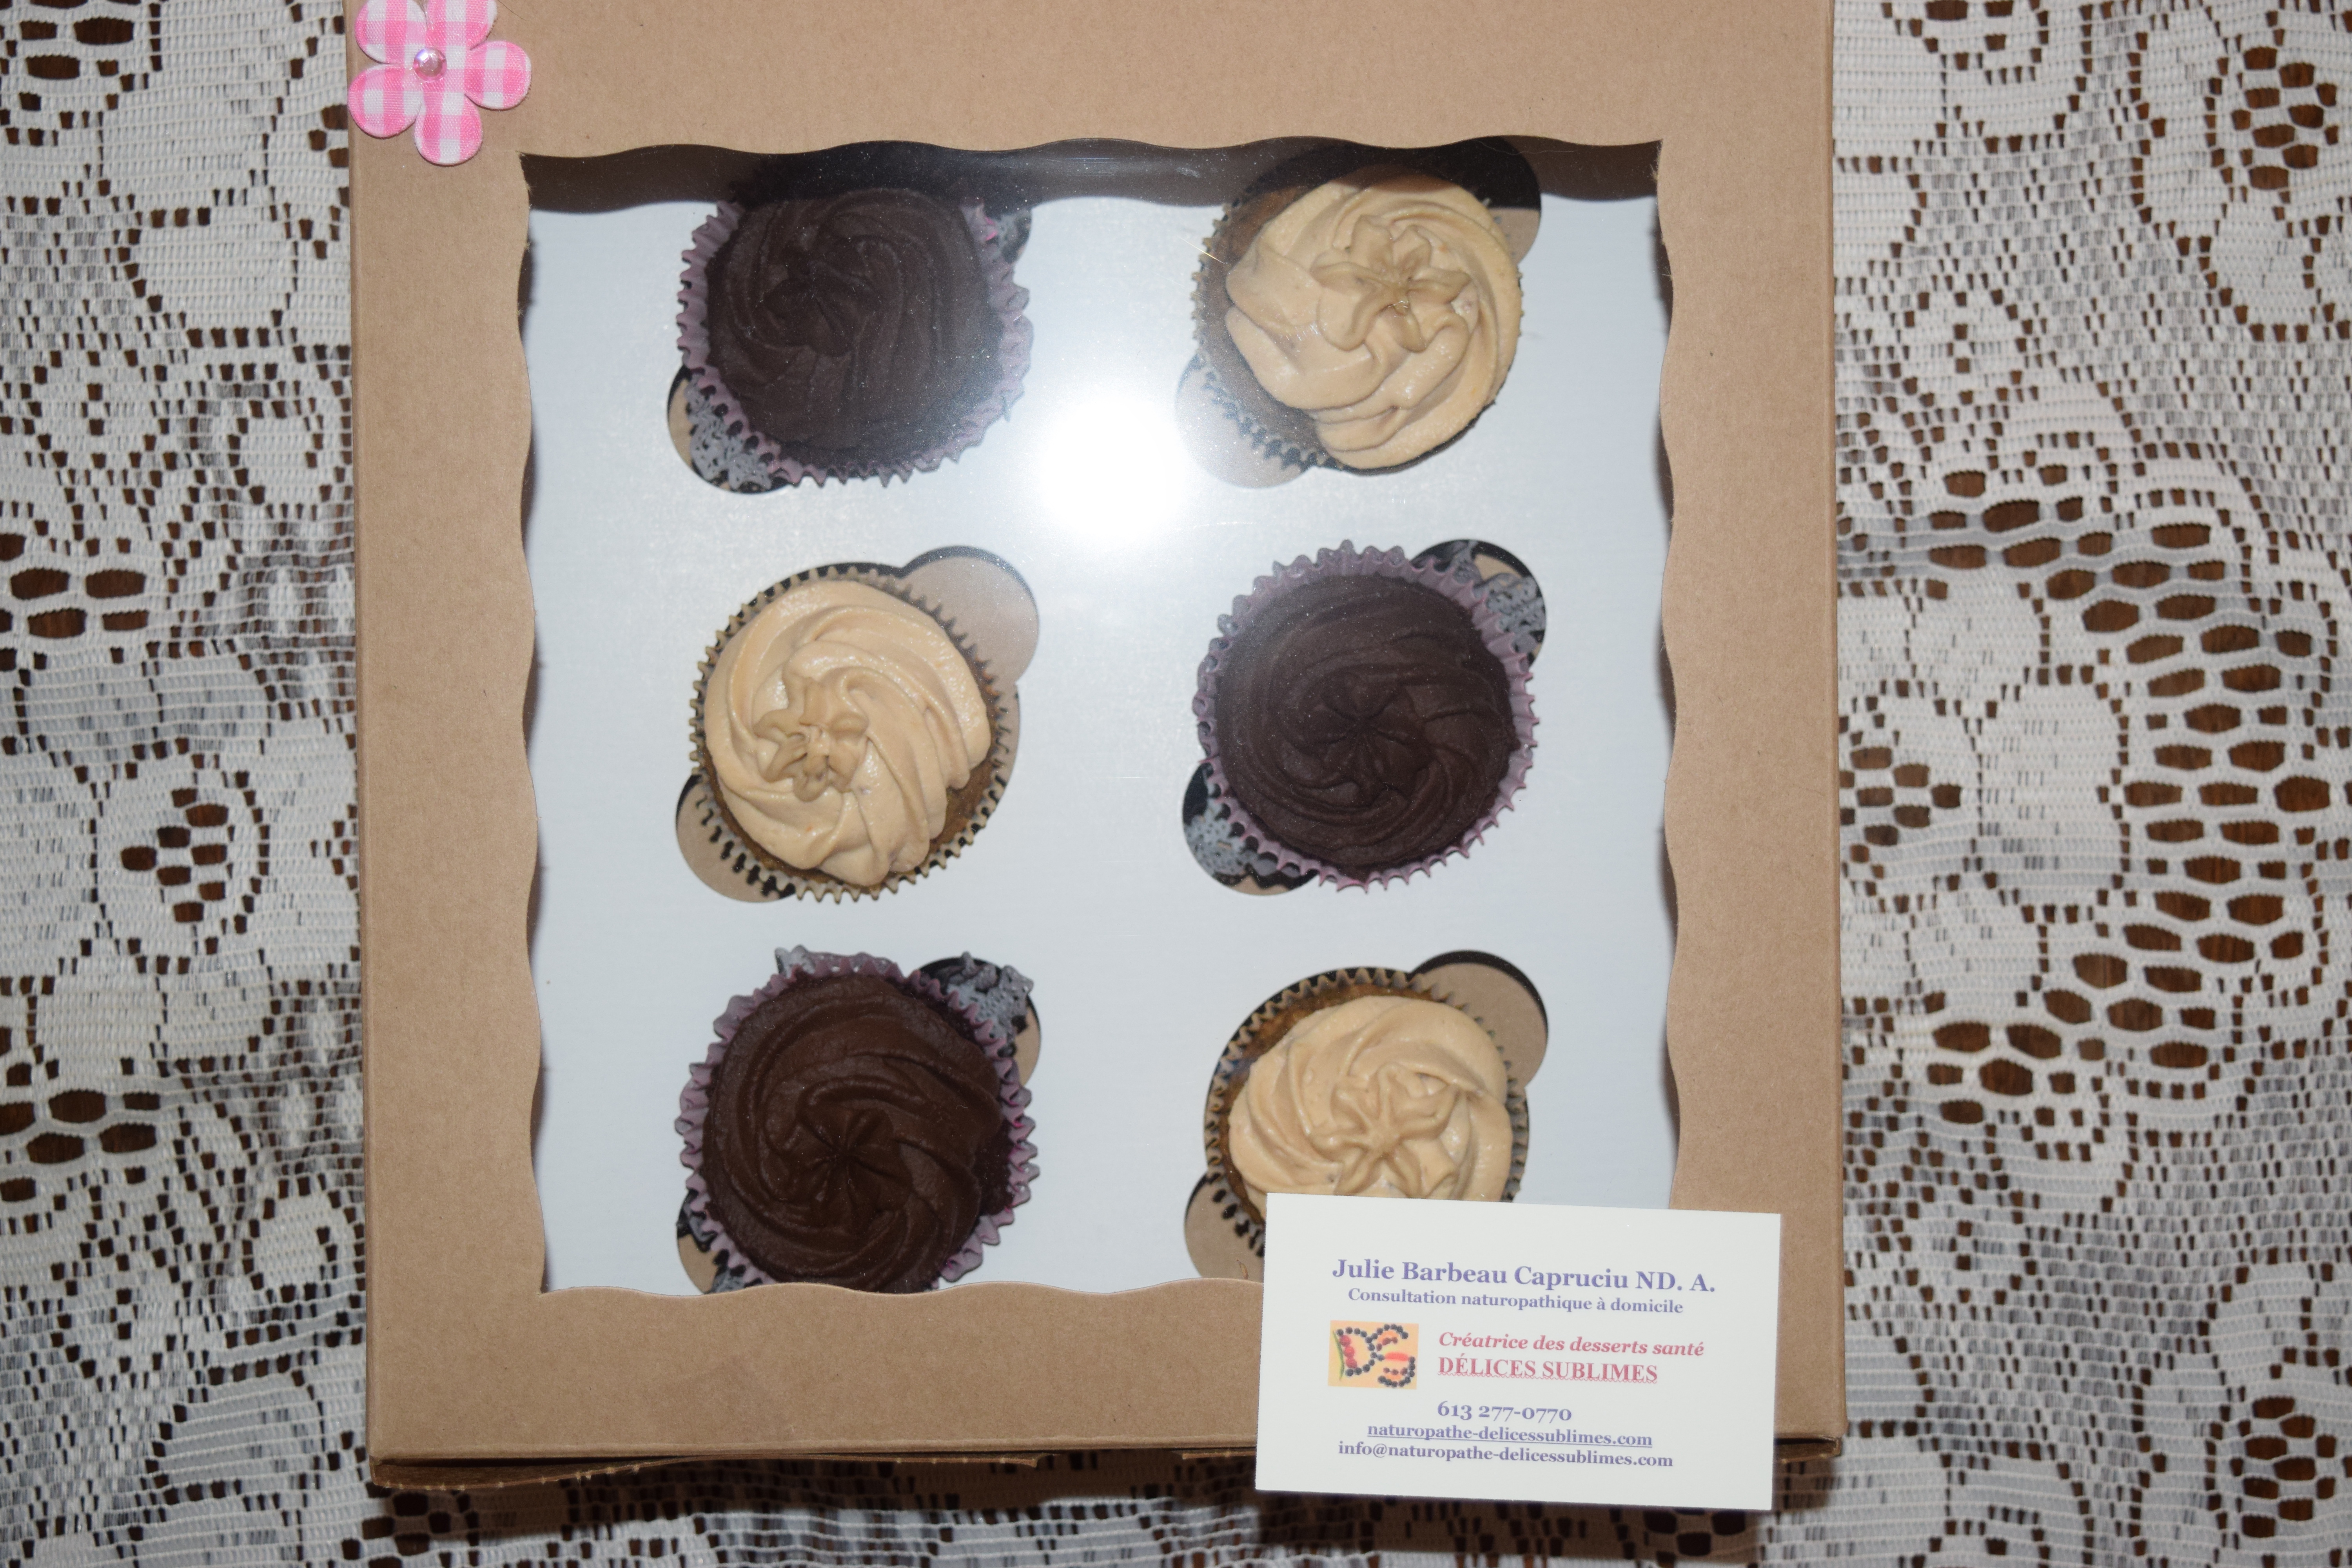 Box of cupcakes (chocolate and banana)